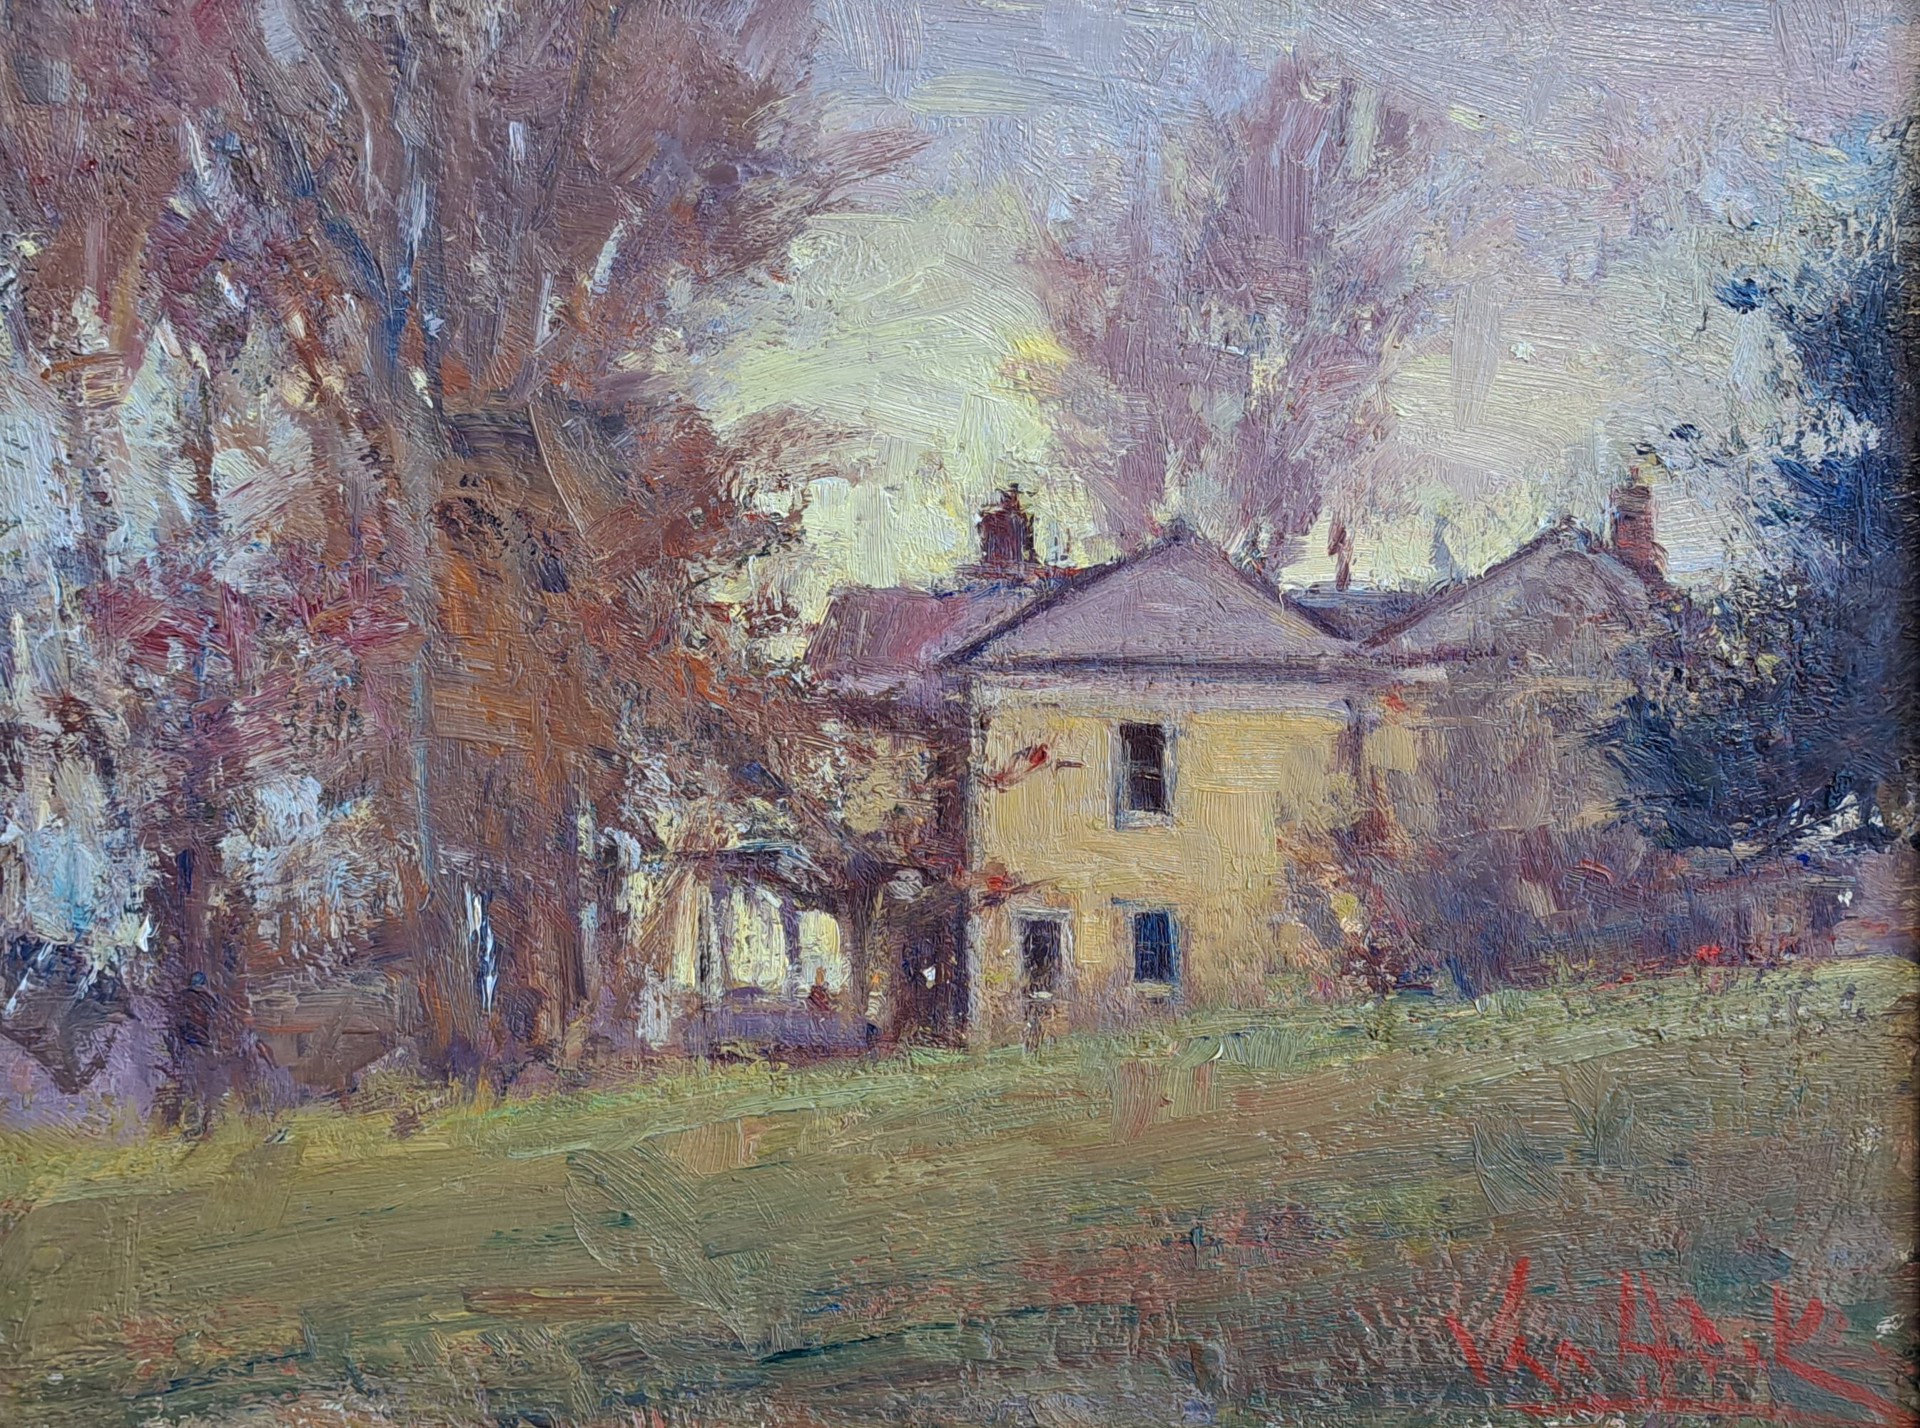 The Yellow House by George Van Hook